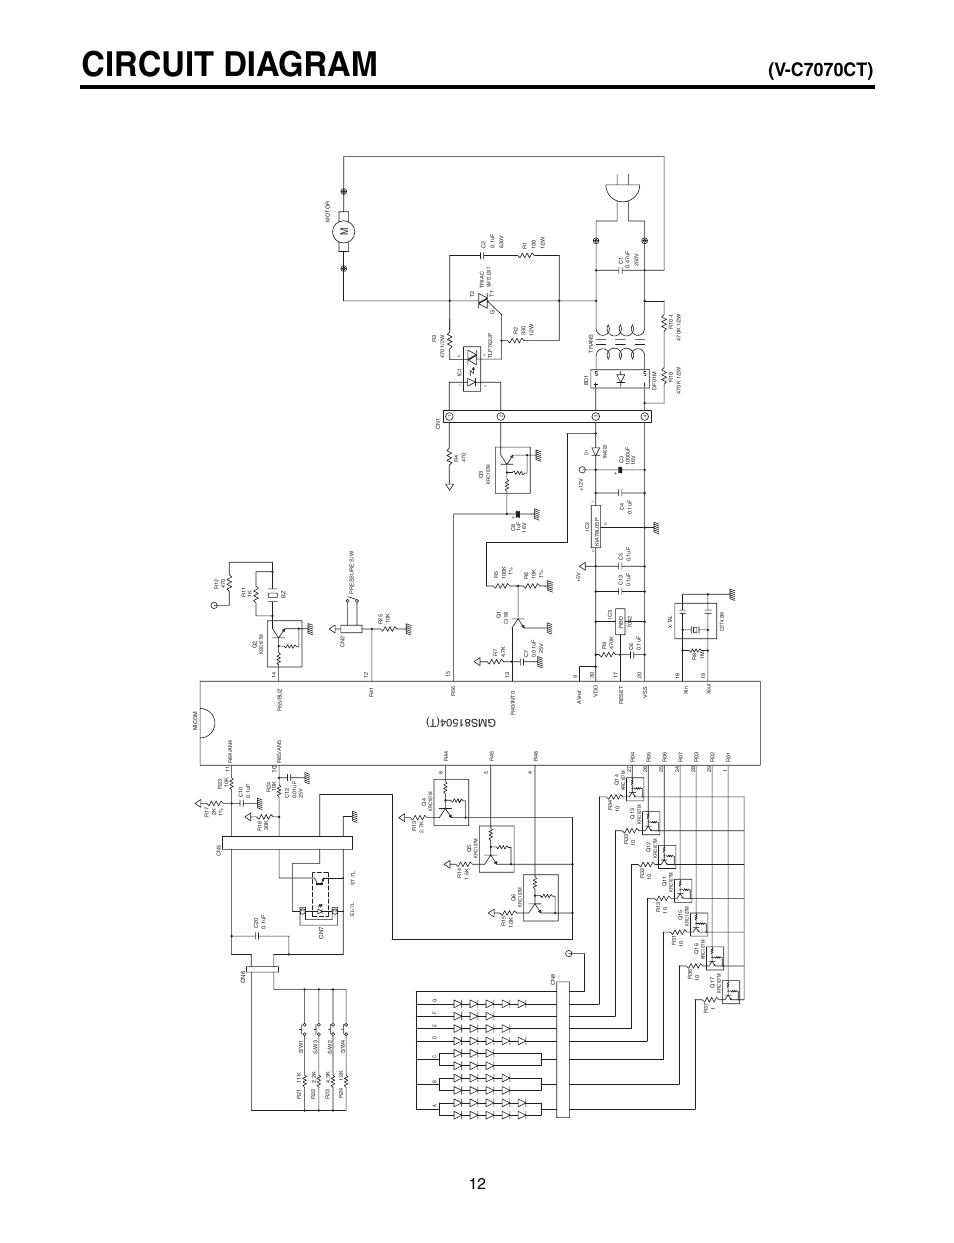 Circuit diagram, V-c7070ct) | LG V-C7050HT User Manual | Page 12 / 23